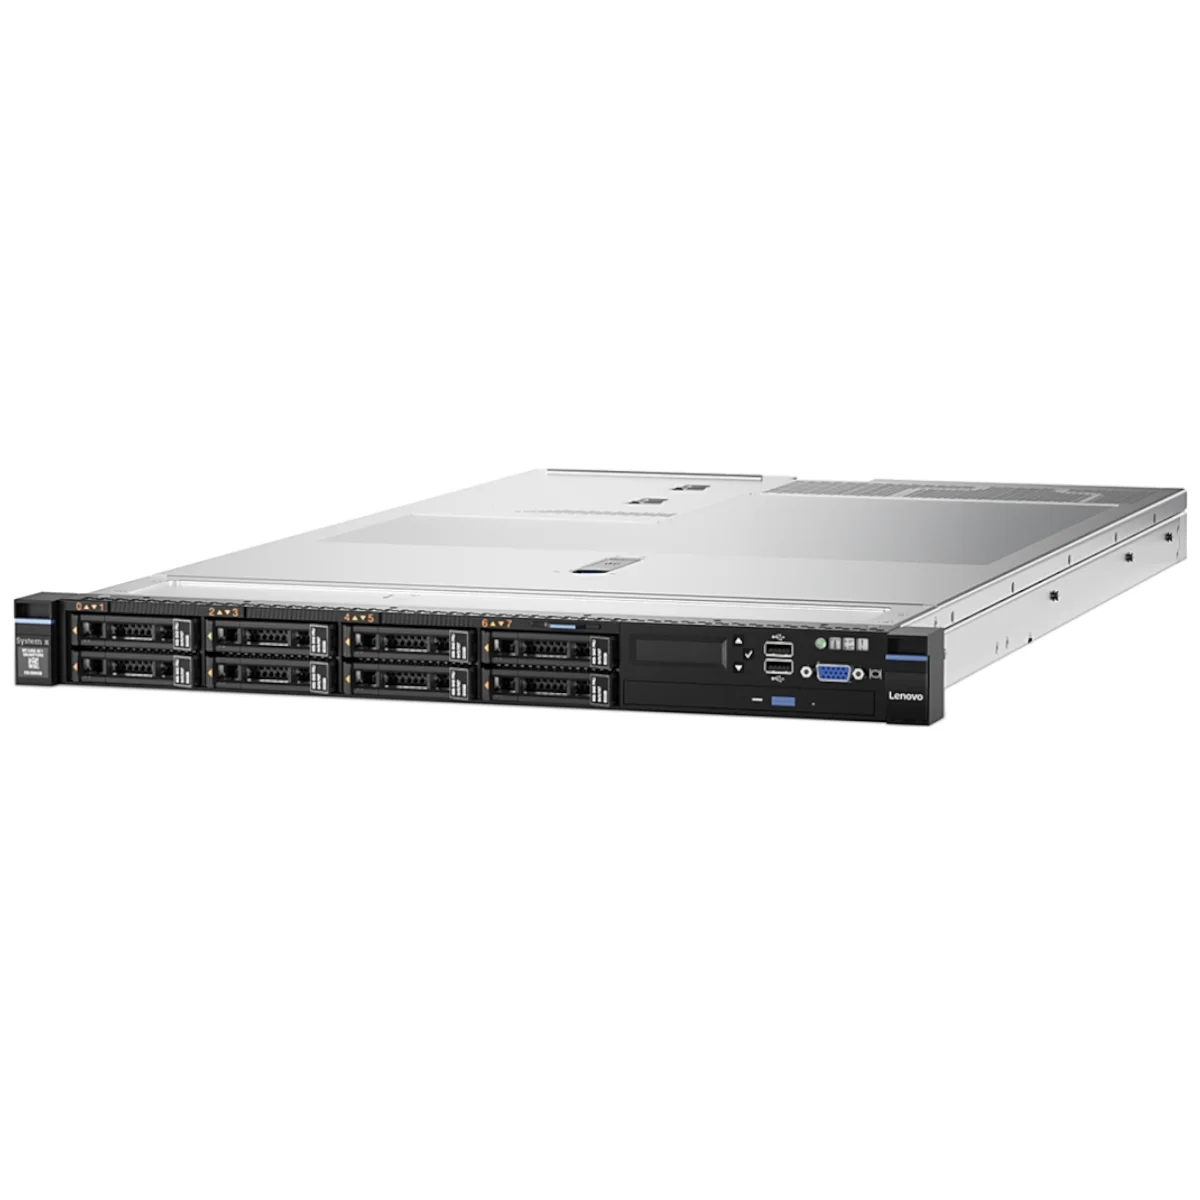 Lenovo System X3550 M5 1U Rack Server